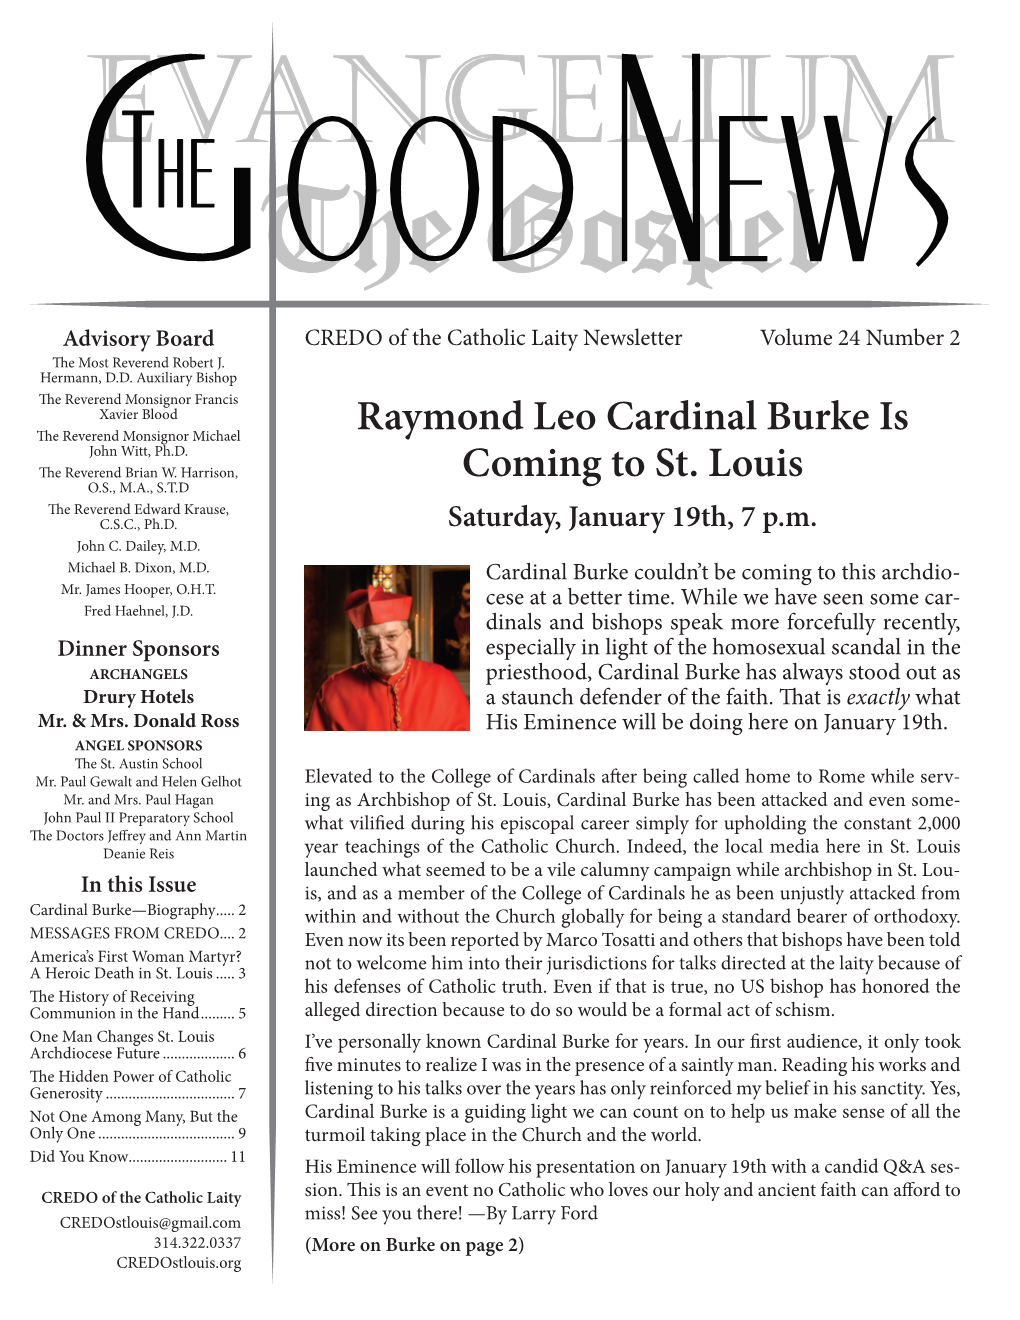 Raymond Leo Cardinal Burke Is Coming to St. Louis